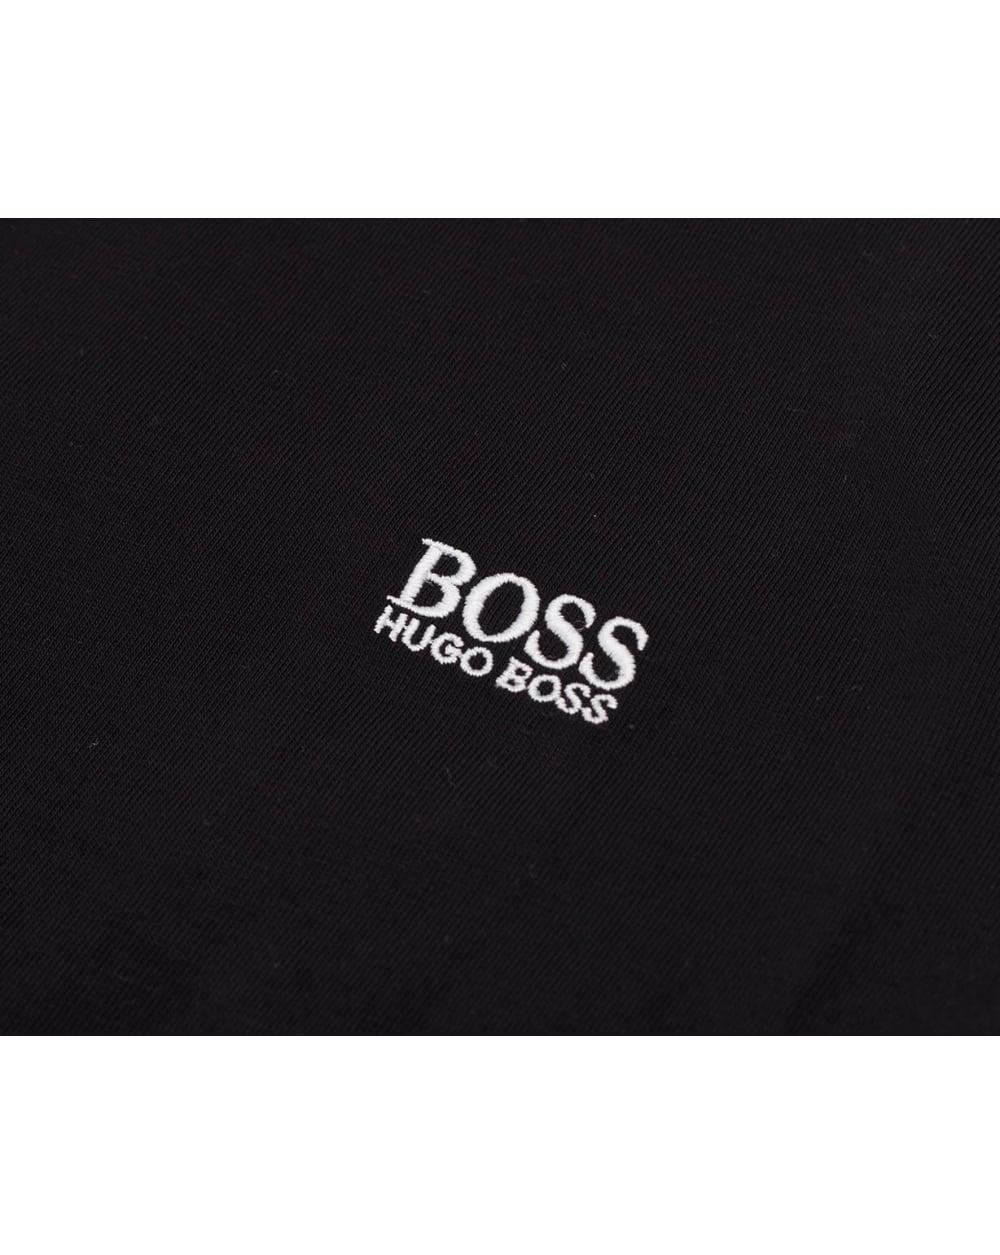 Small Logo - Kids Boss Hugo Boss Small Logo Classic T Shirt